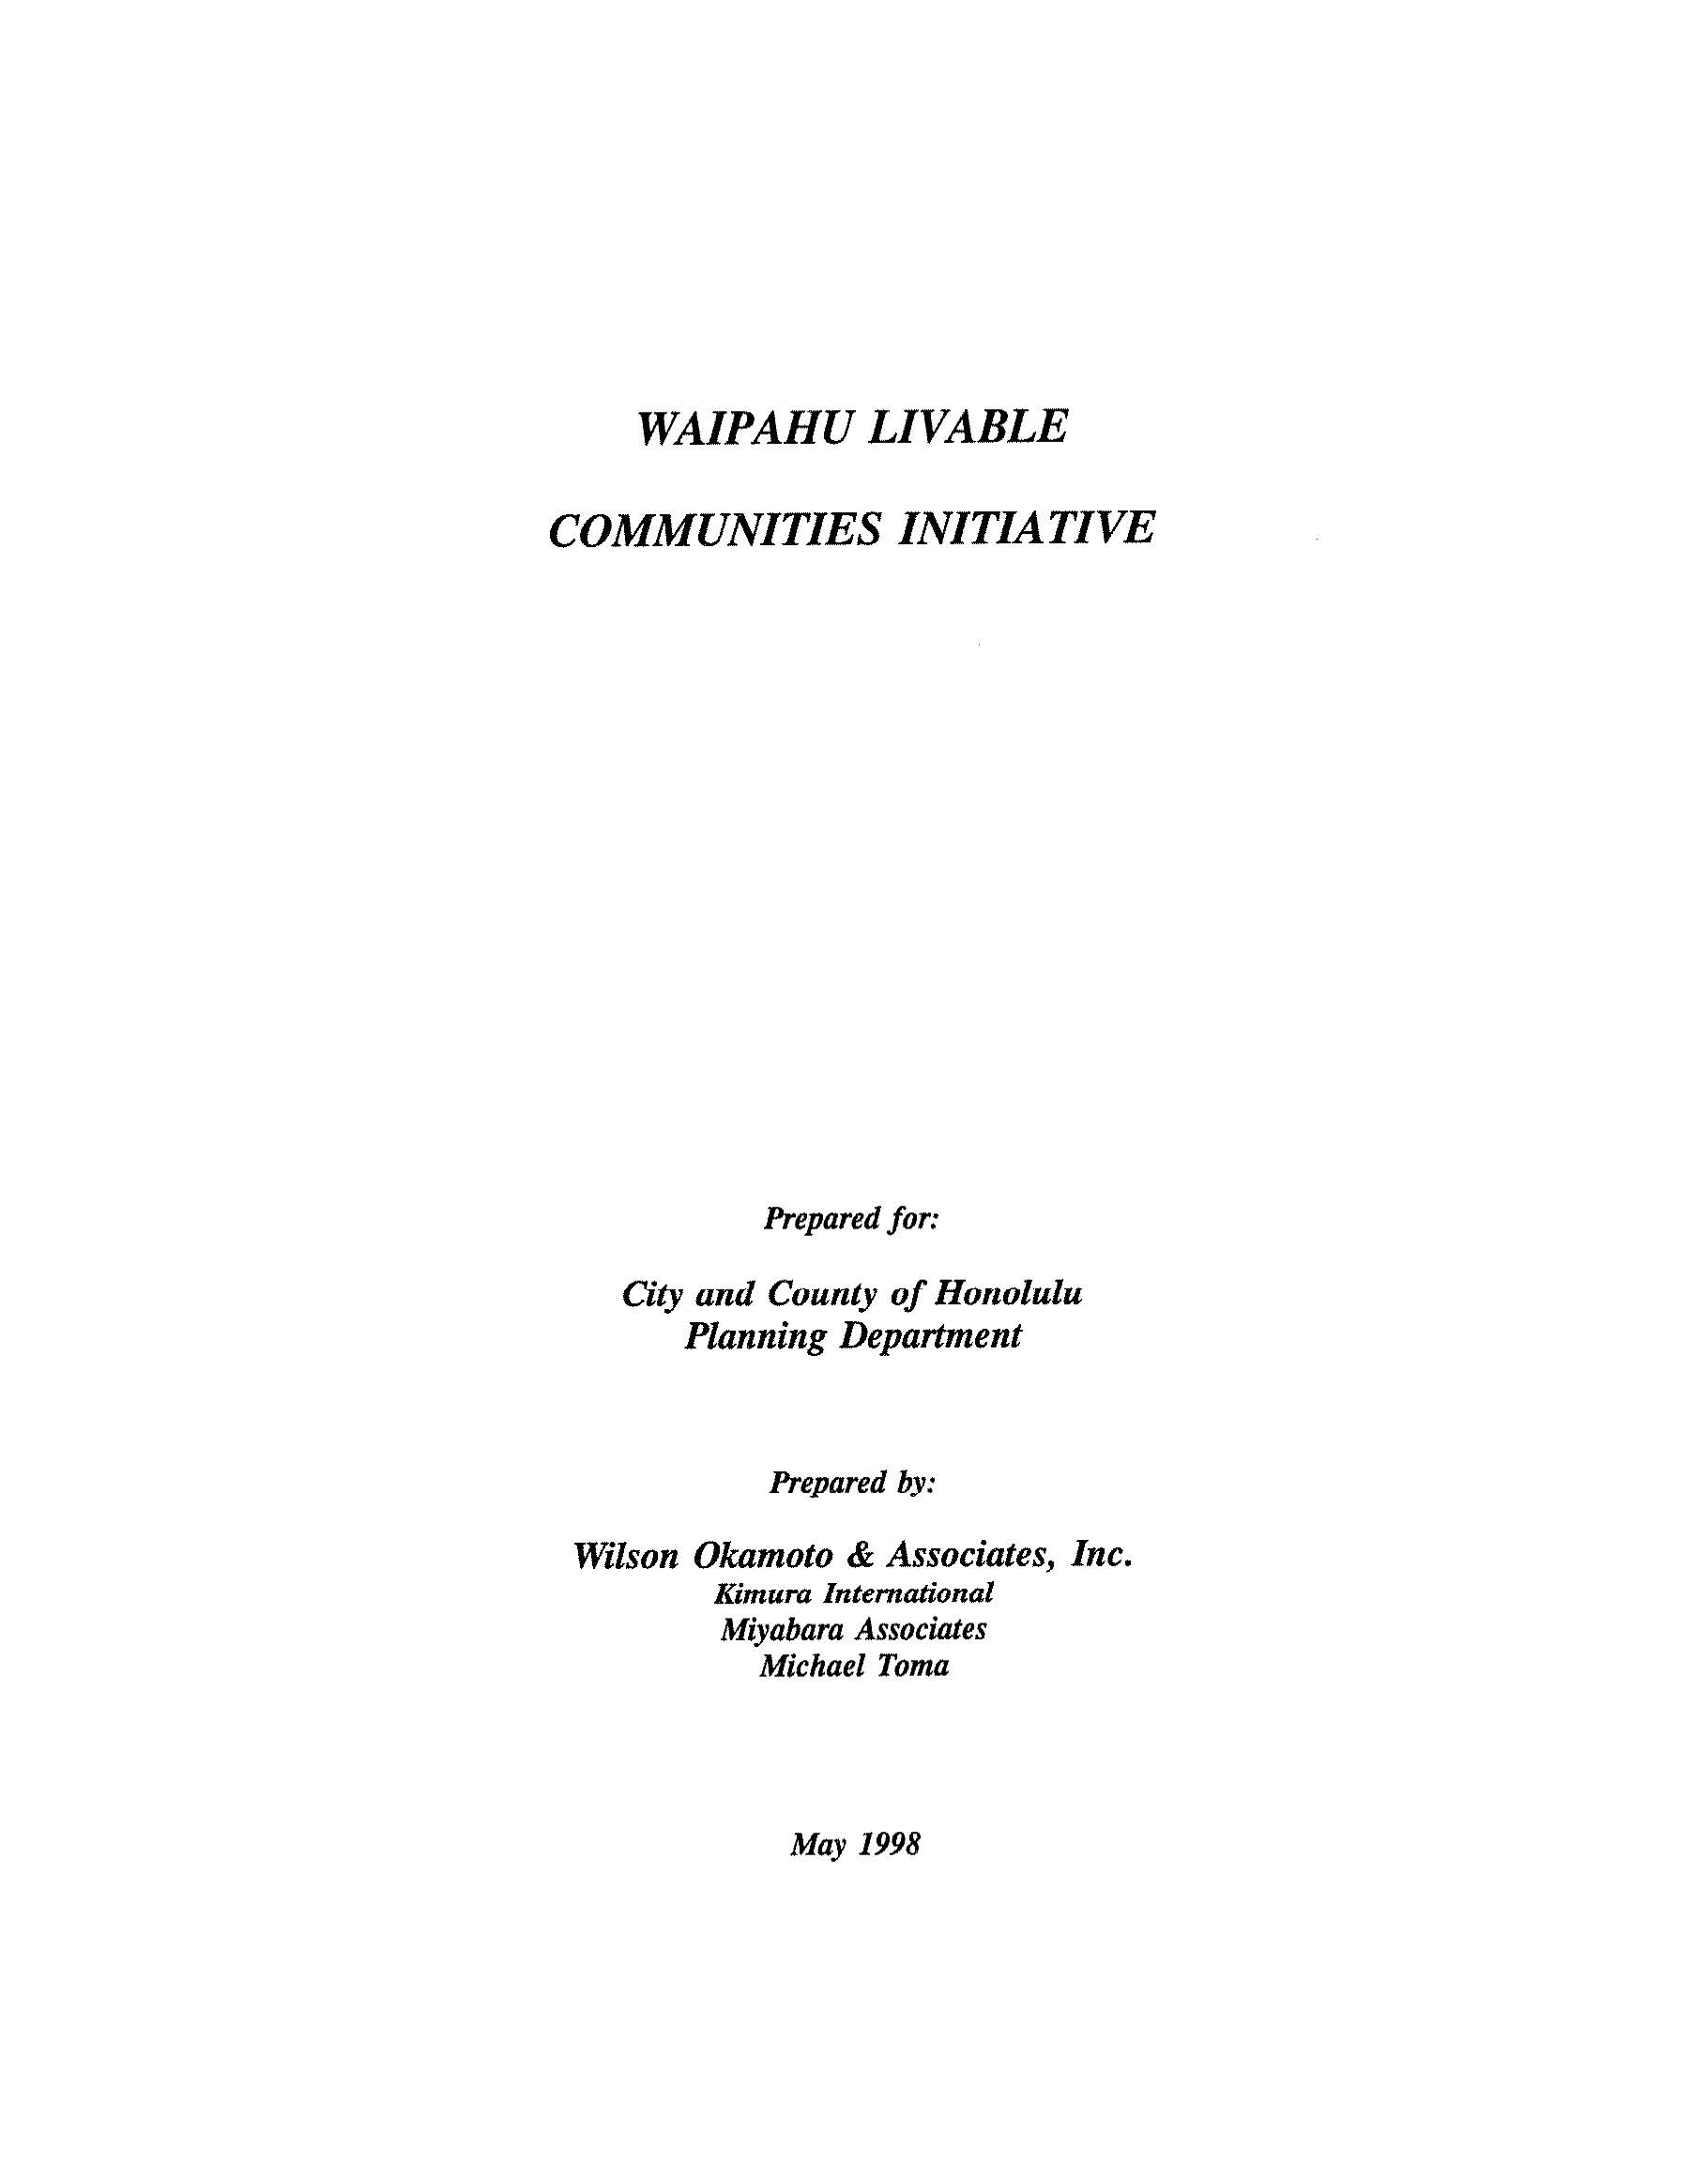 160531_WaipahuLivableCommunities(1998)_Page_002.jpg